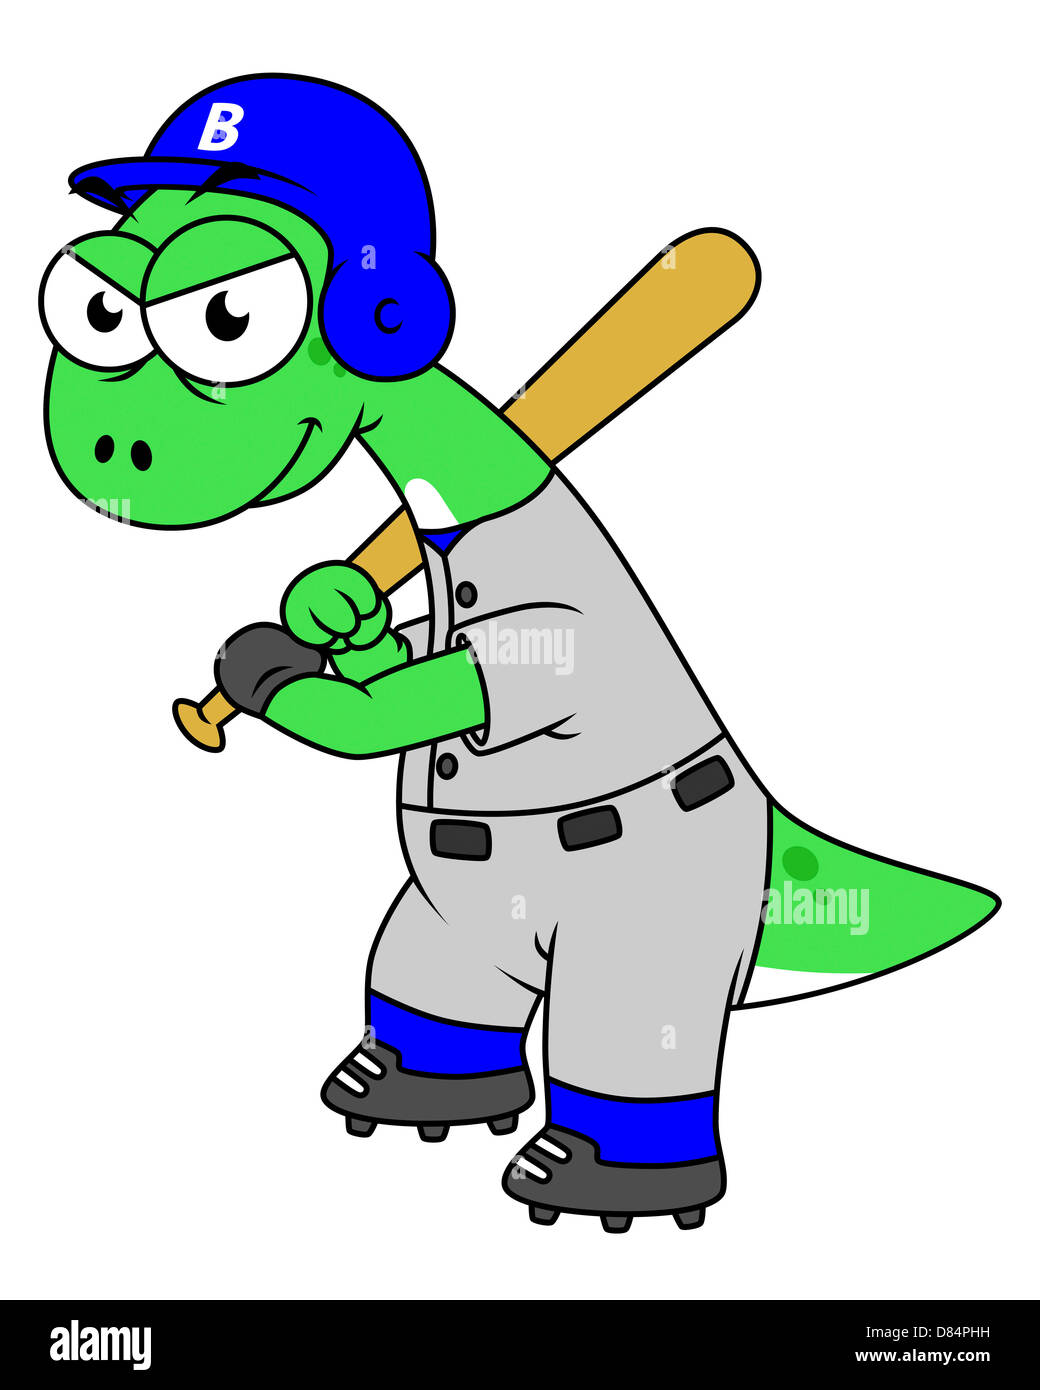 Illustration of a Brontosaurus baseball player. Stock Photo